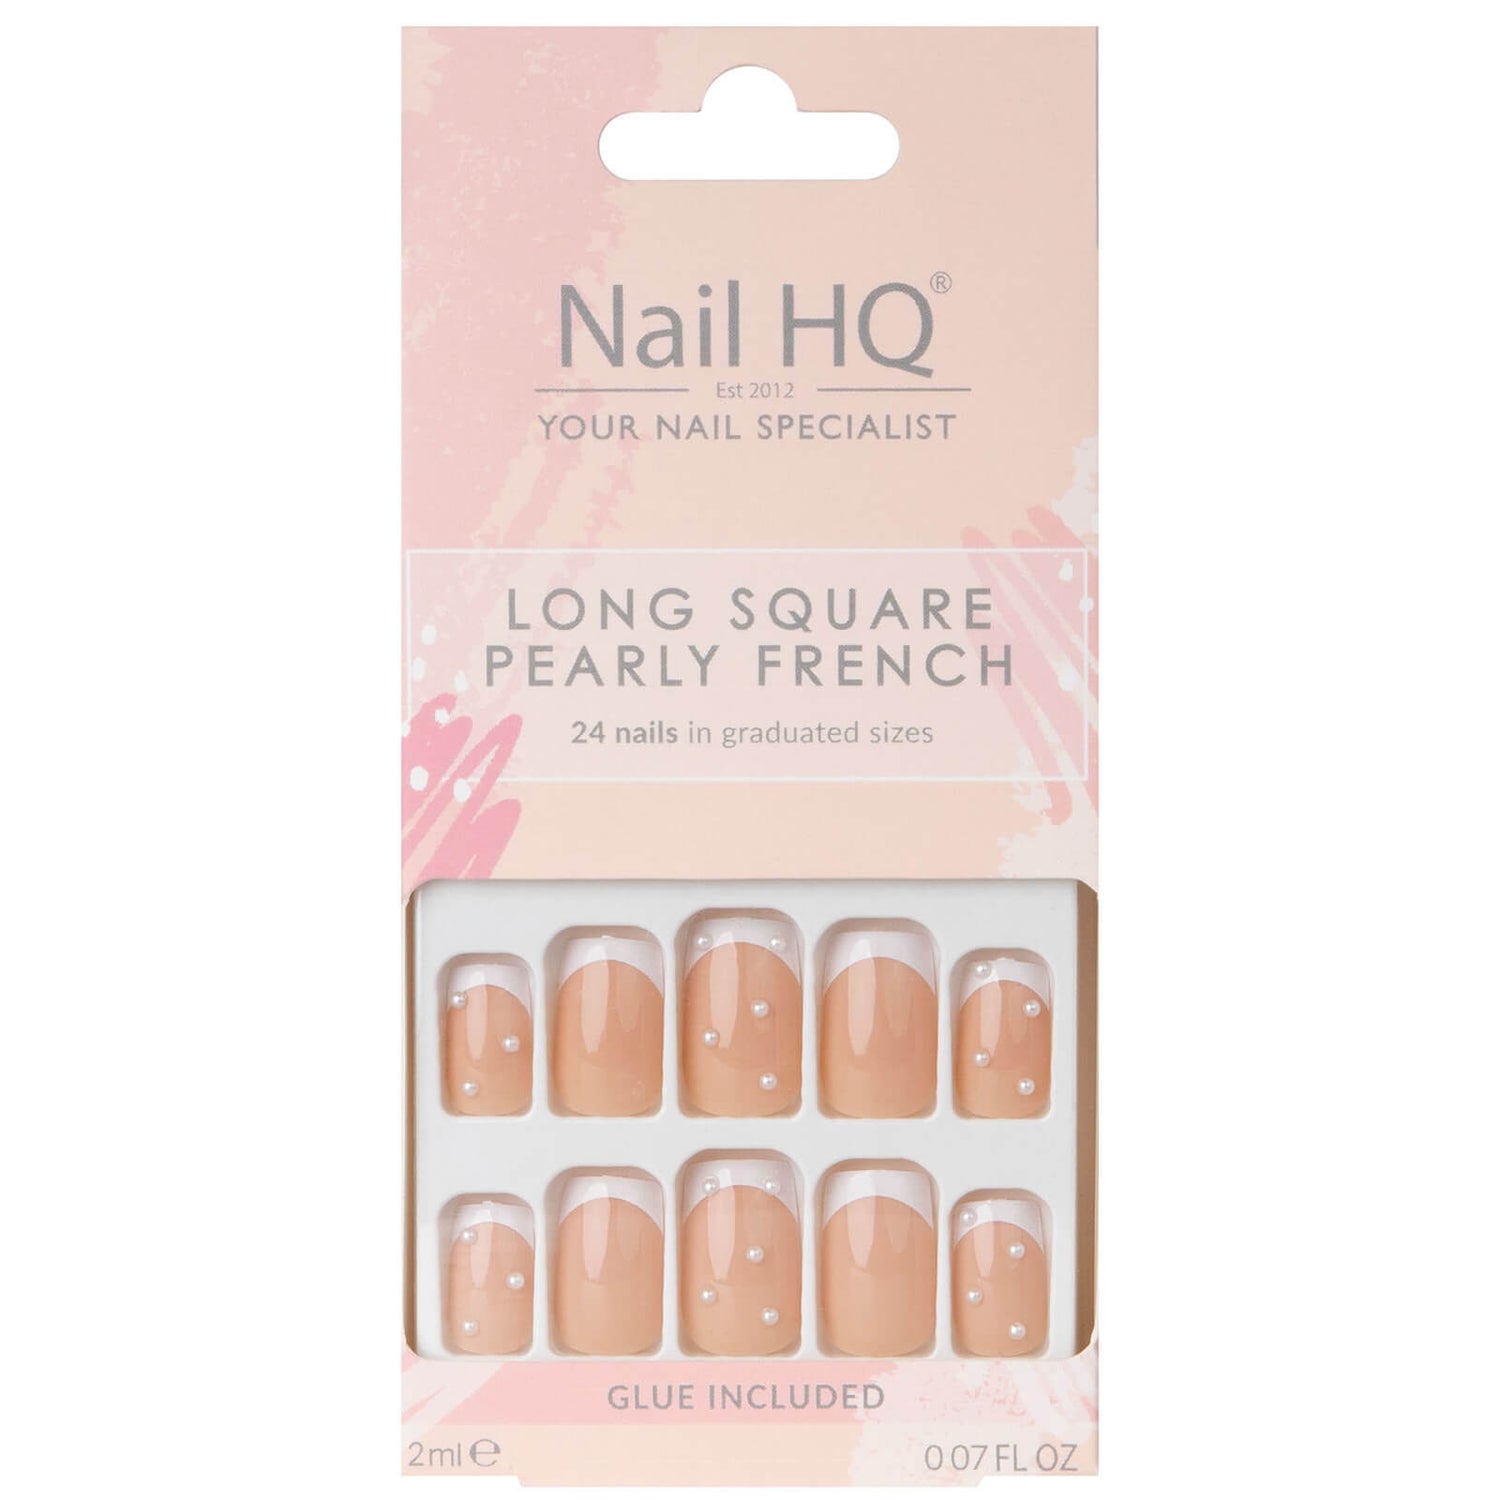 Nail HQ Long Square Pearly French Nails